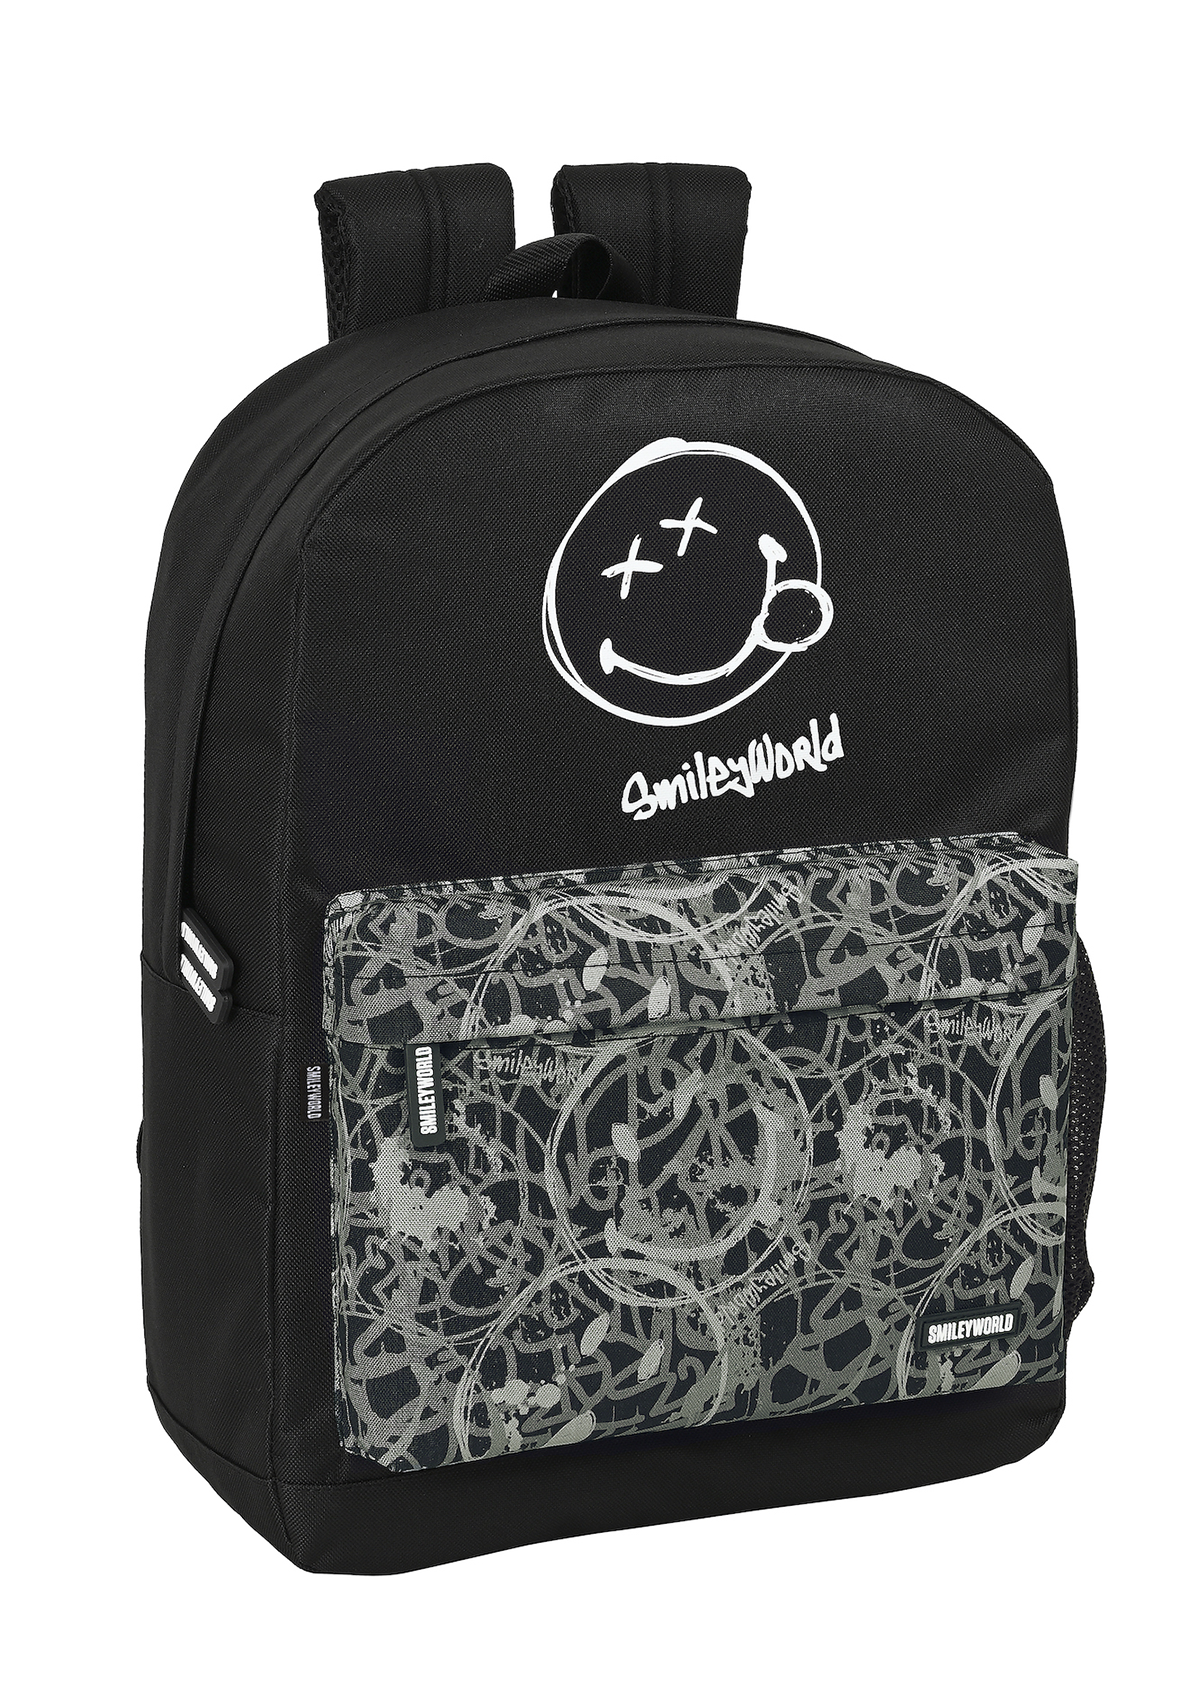 Smiley World Large Backpack